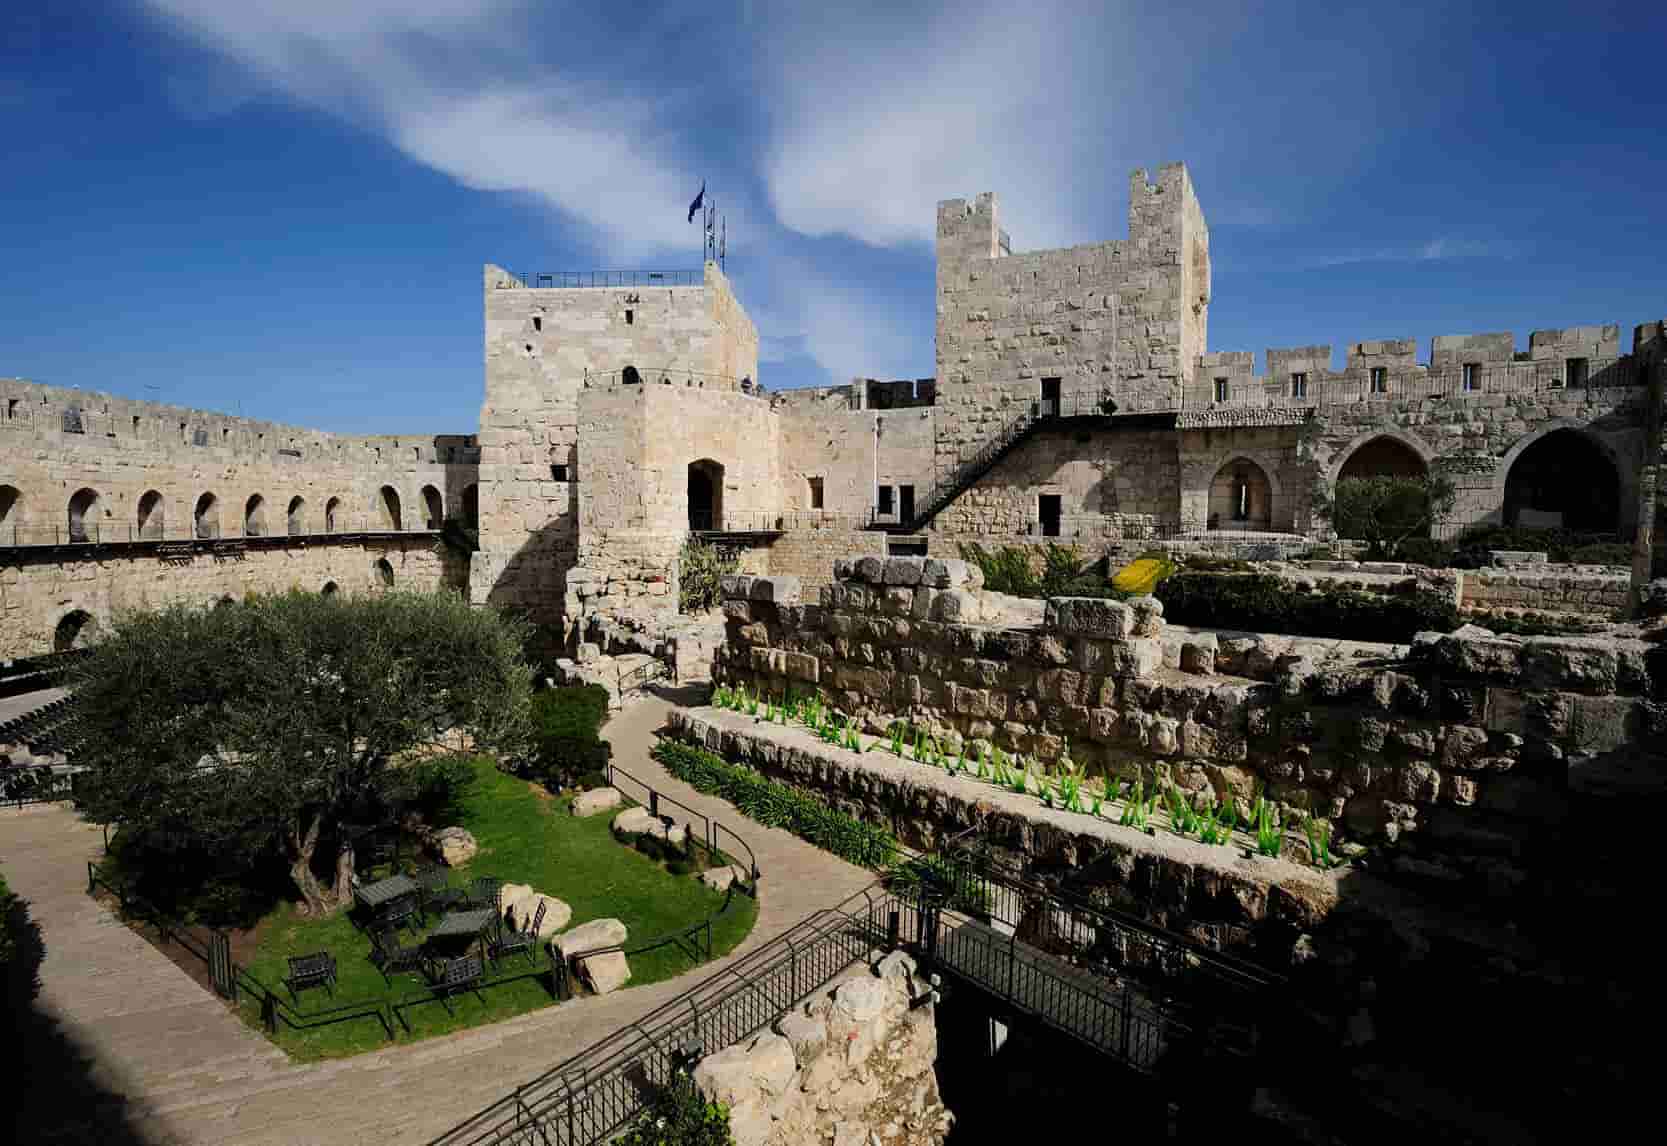 THE CITADEL OF DAVID IN JERUSALEM